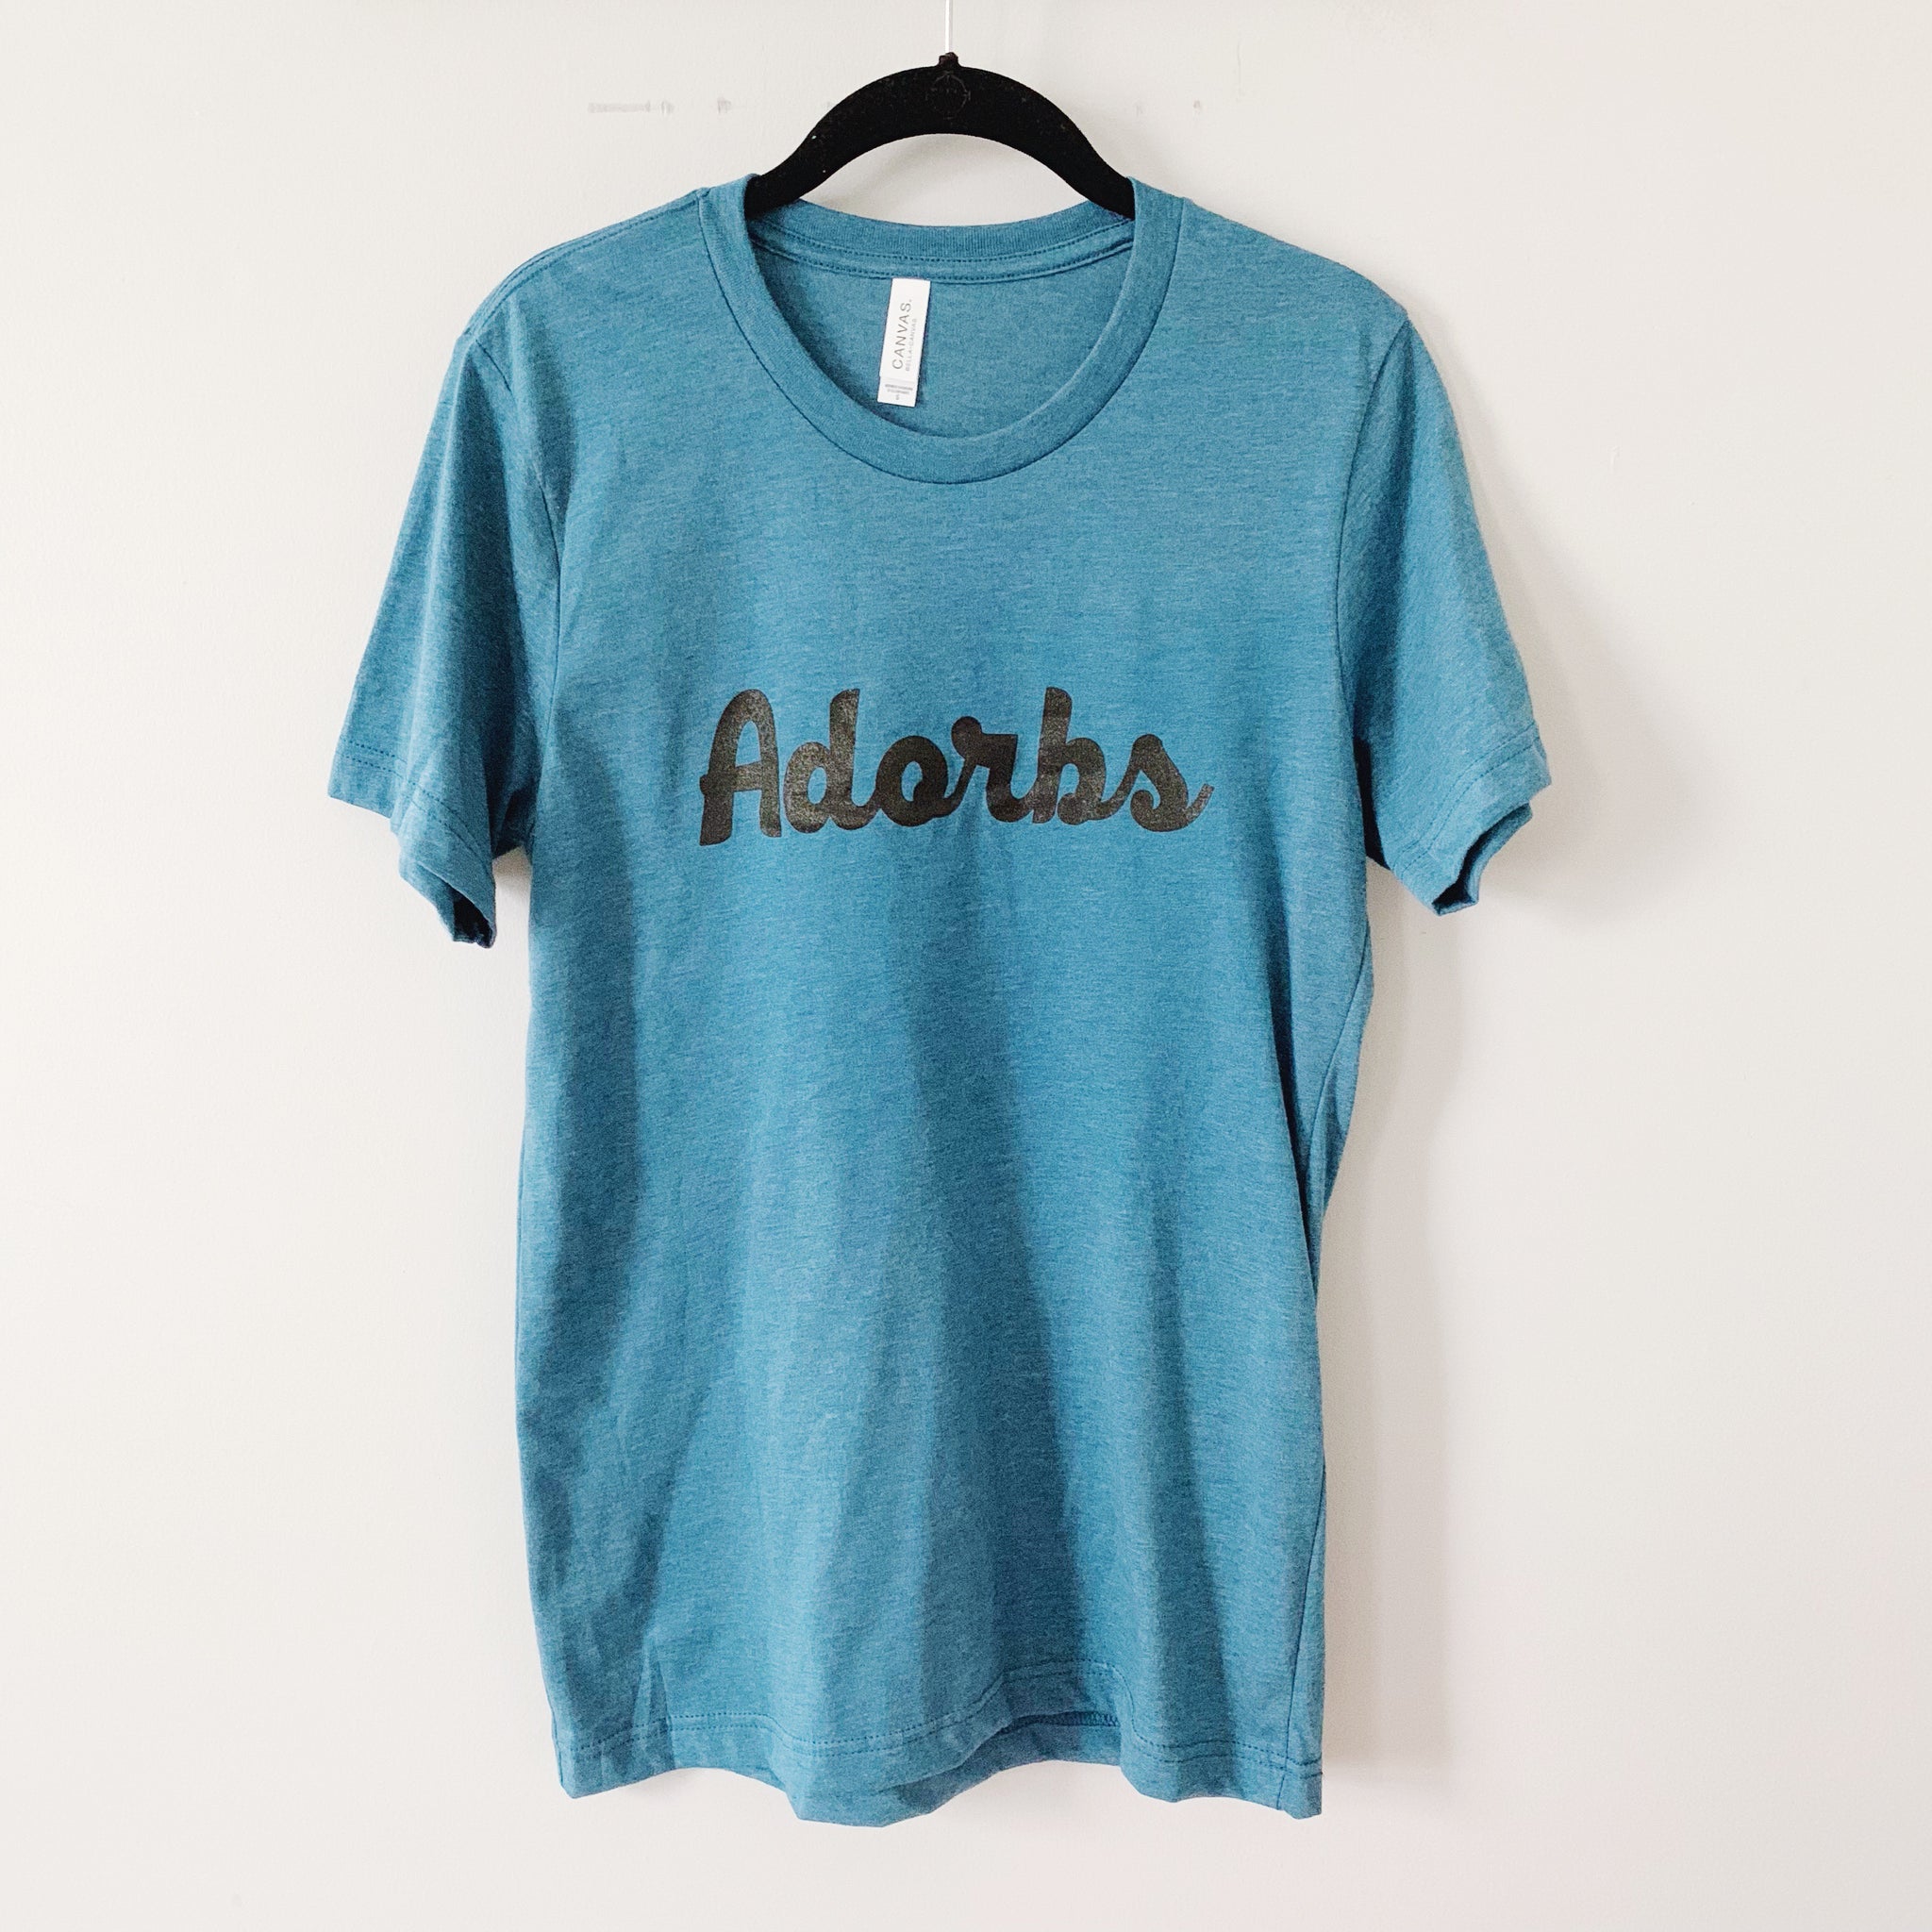 Adorbs T-Shirt